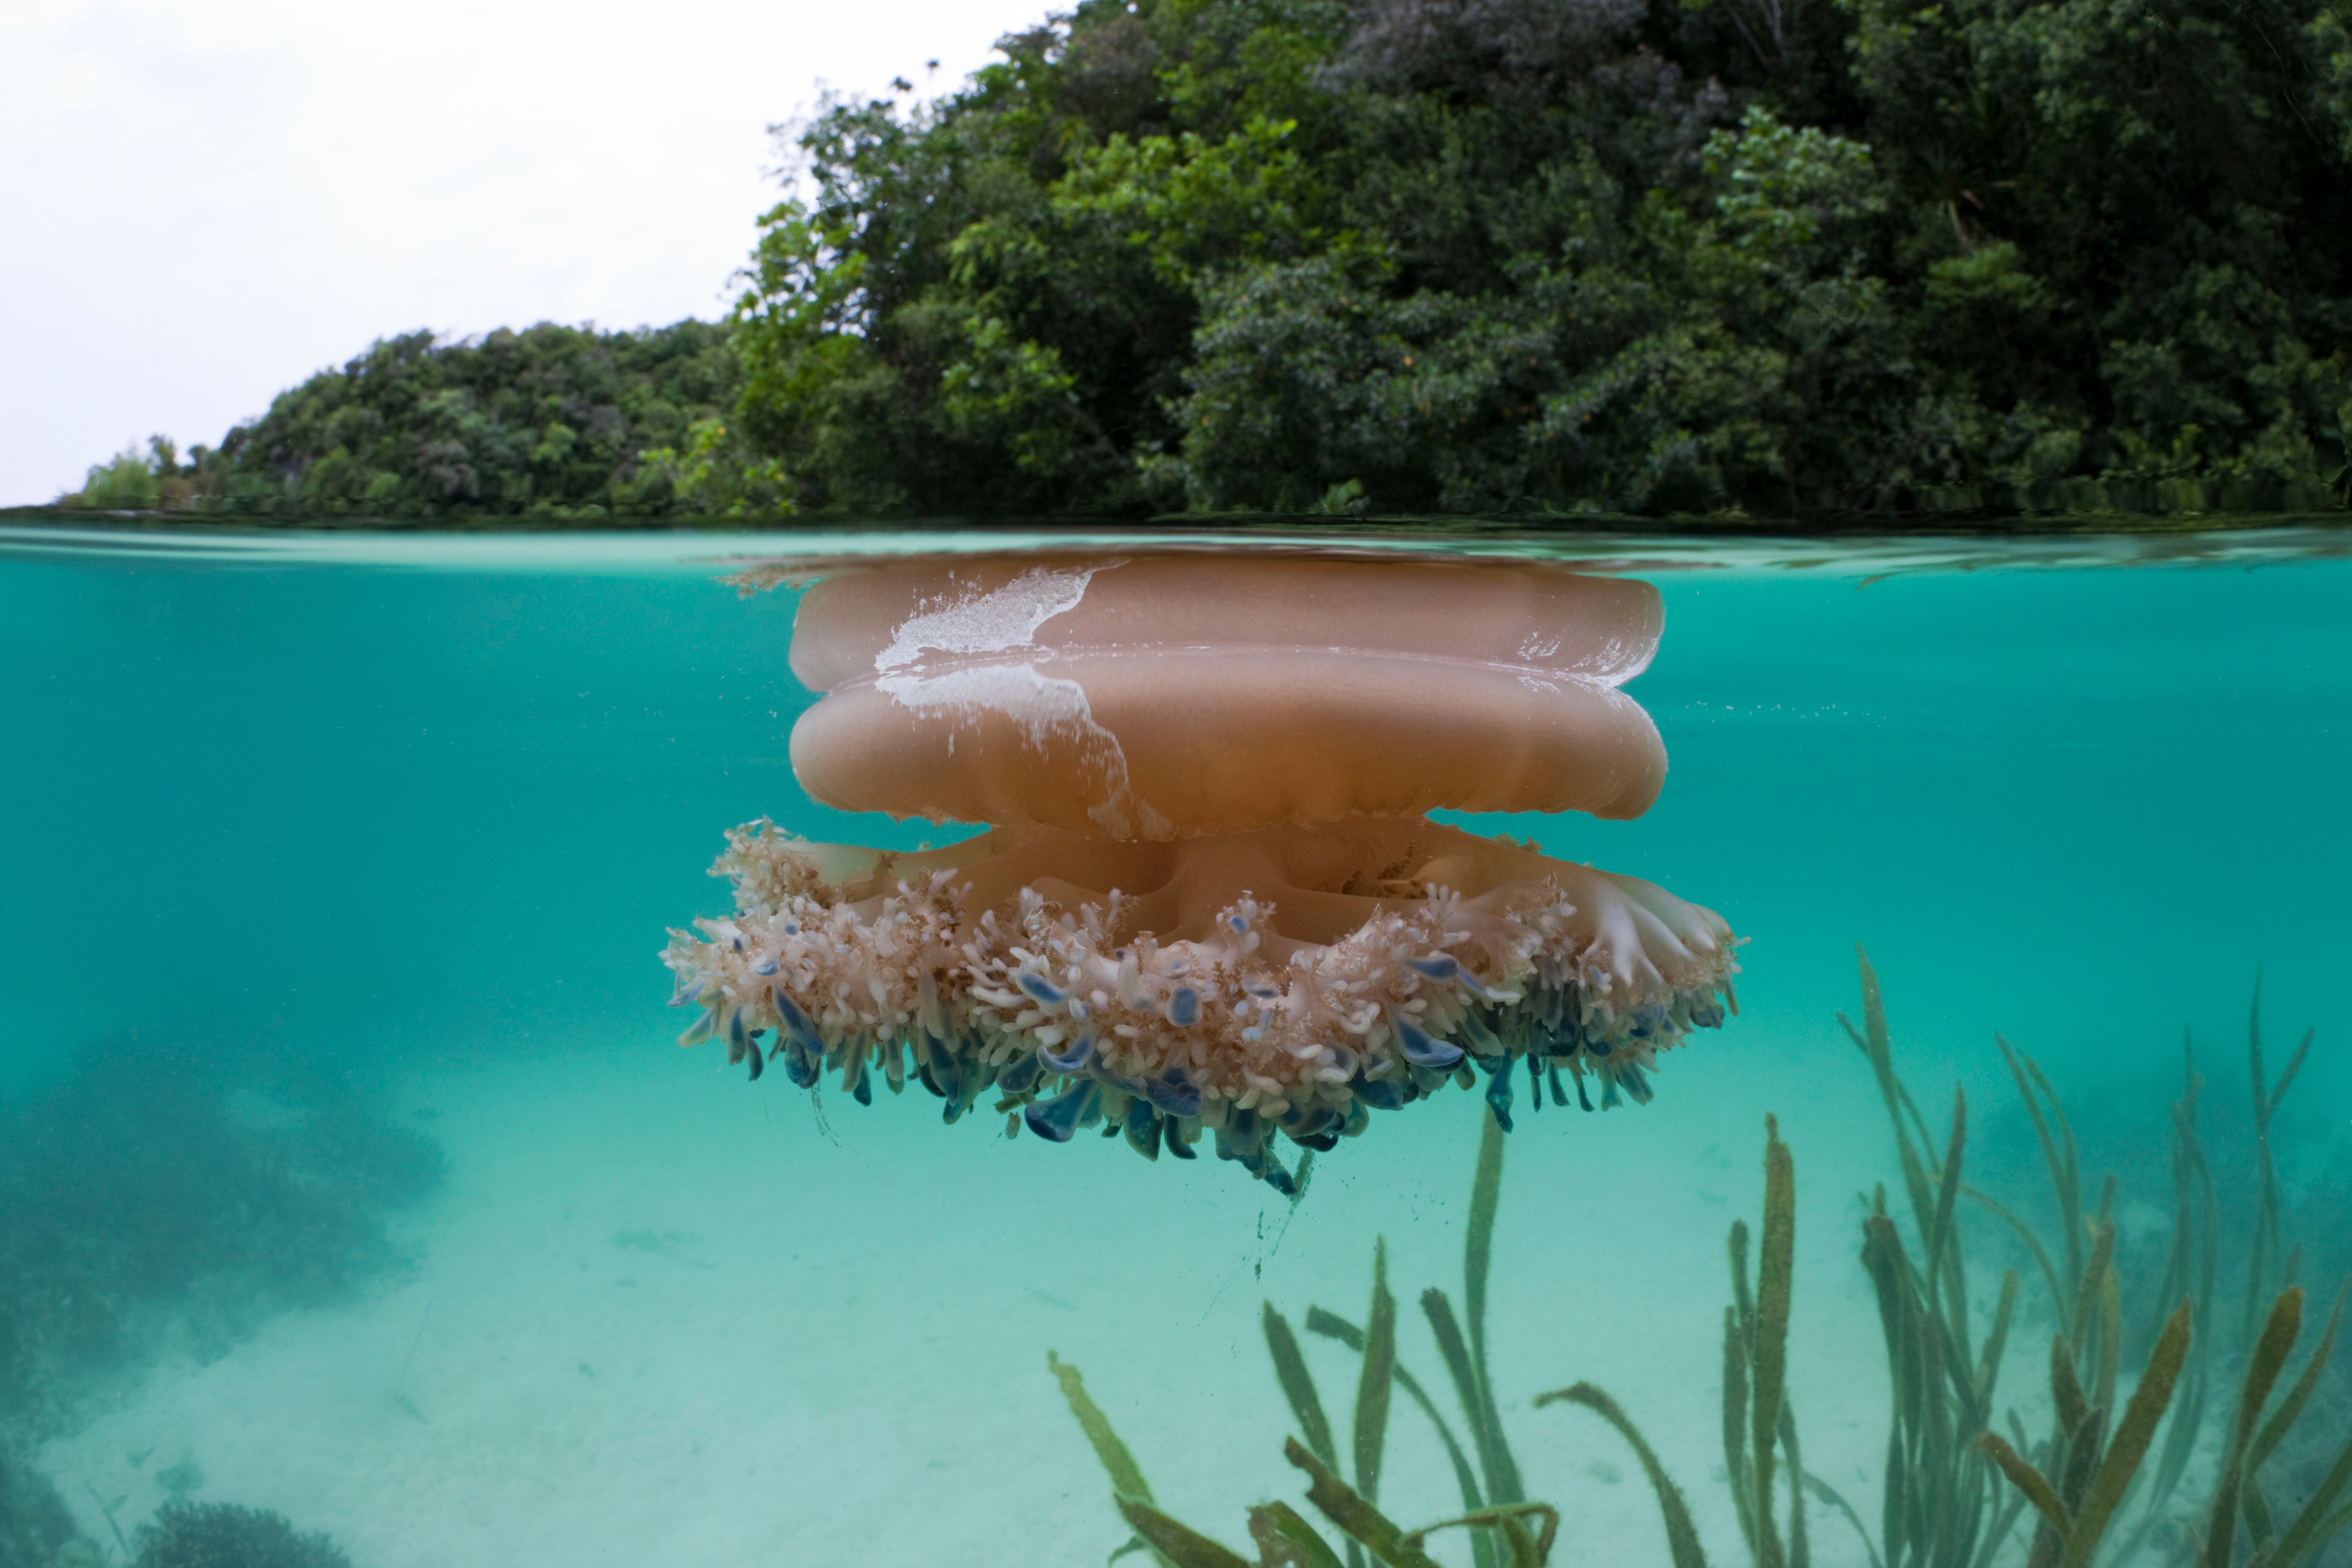 Upside-Down Jellyfish